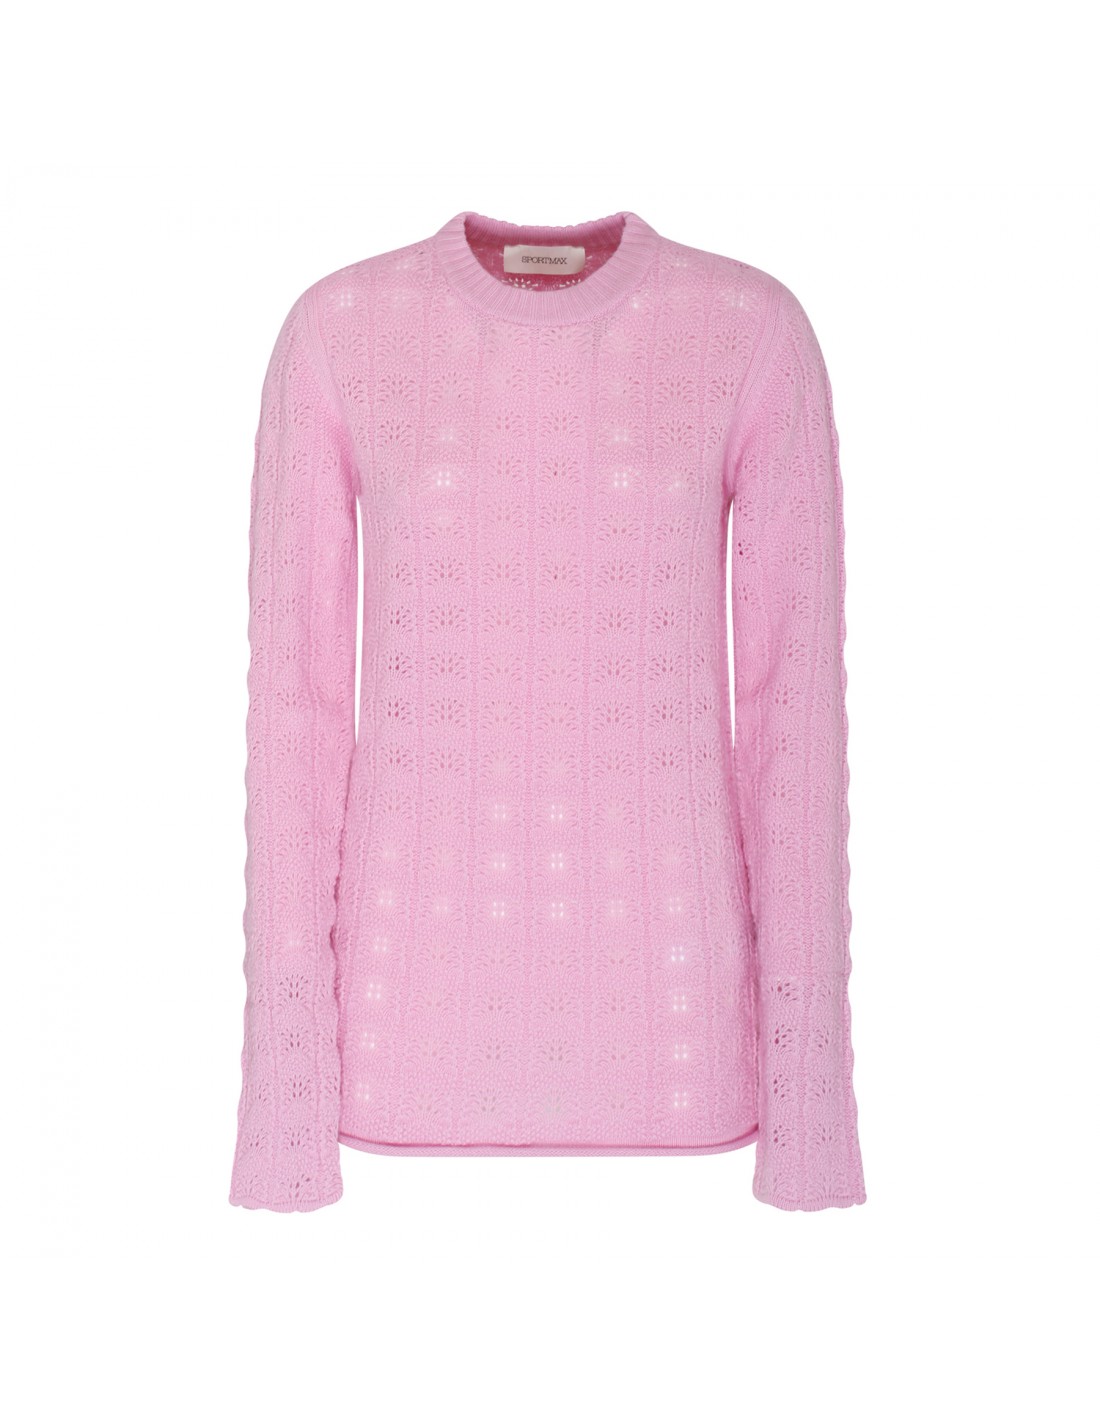 Pink wool blend sweater